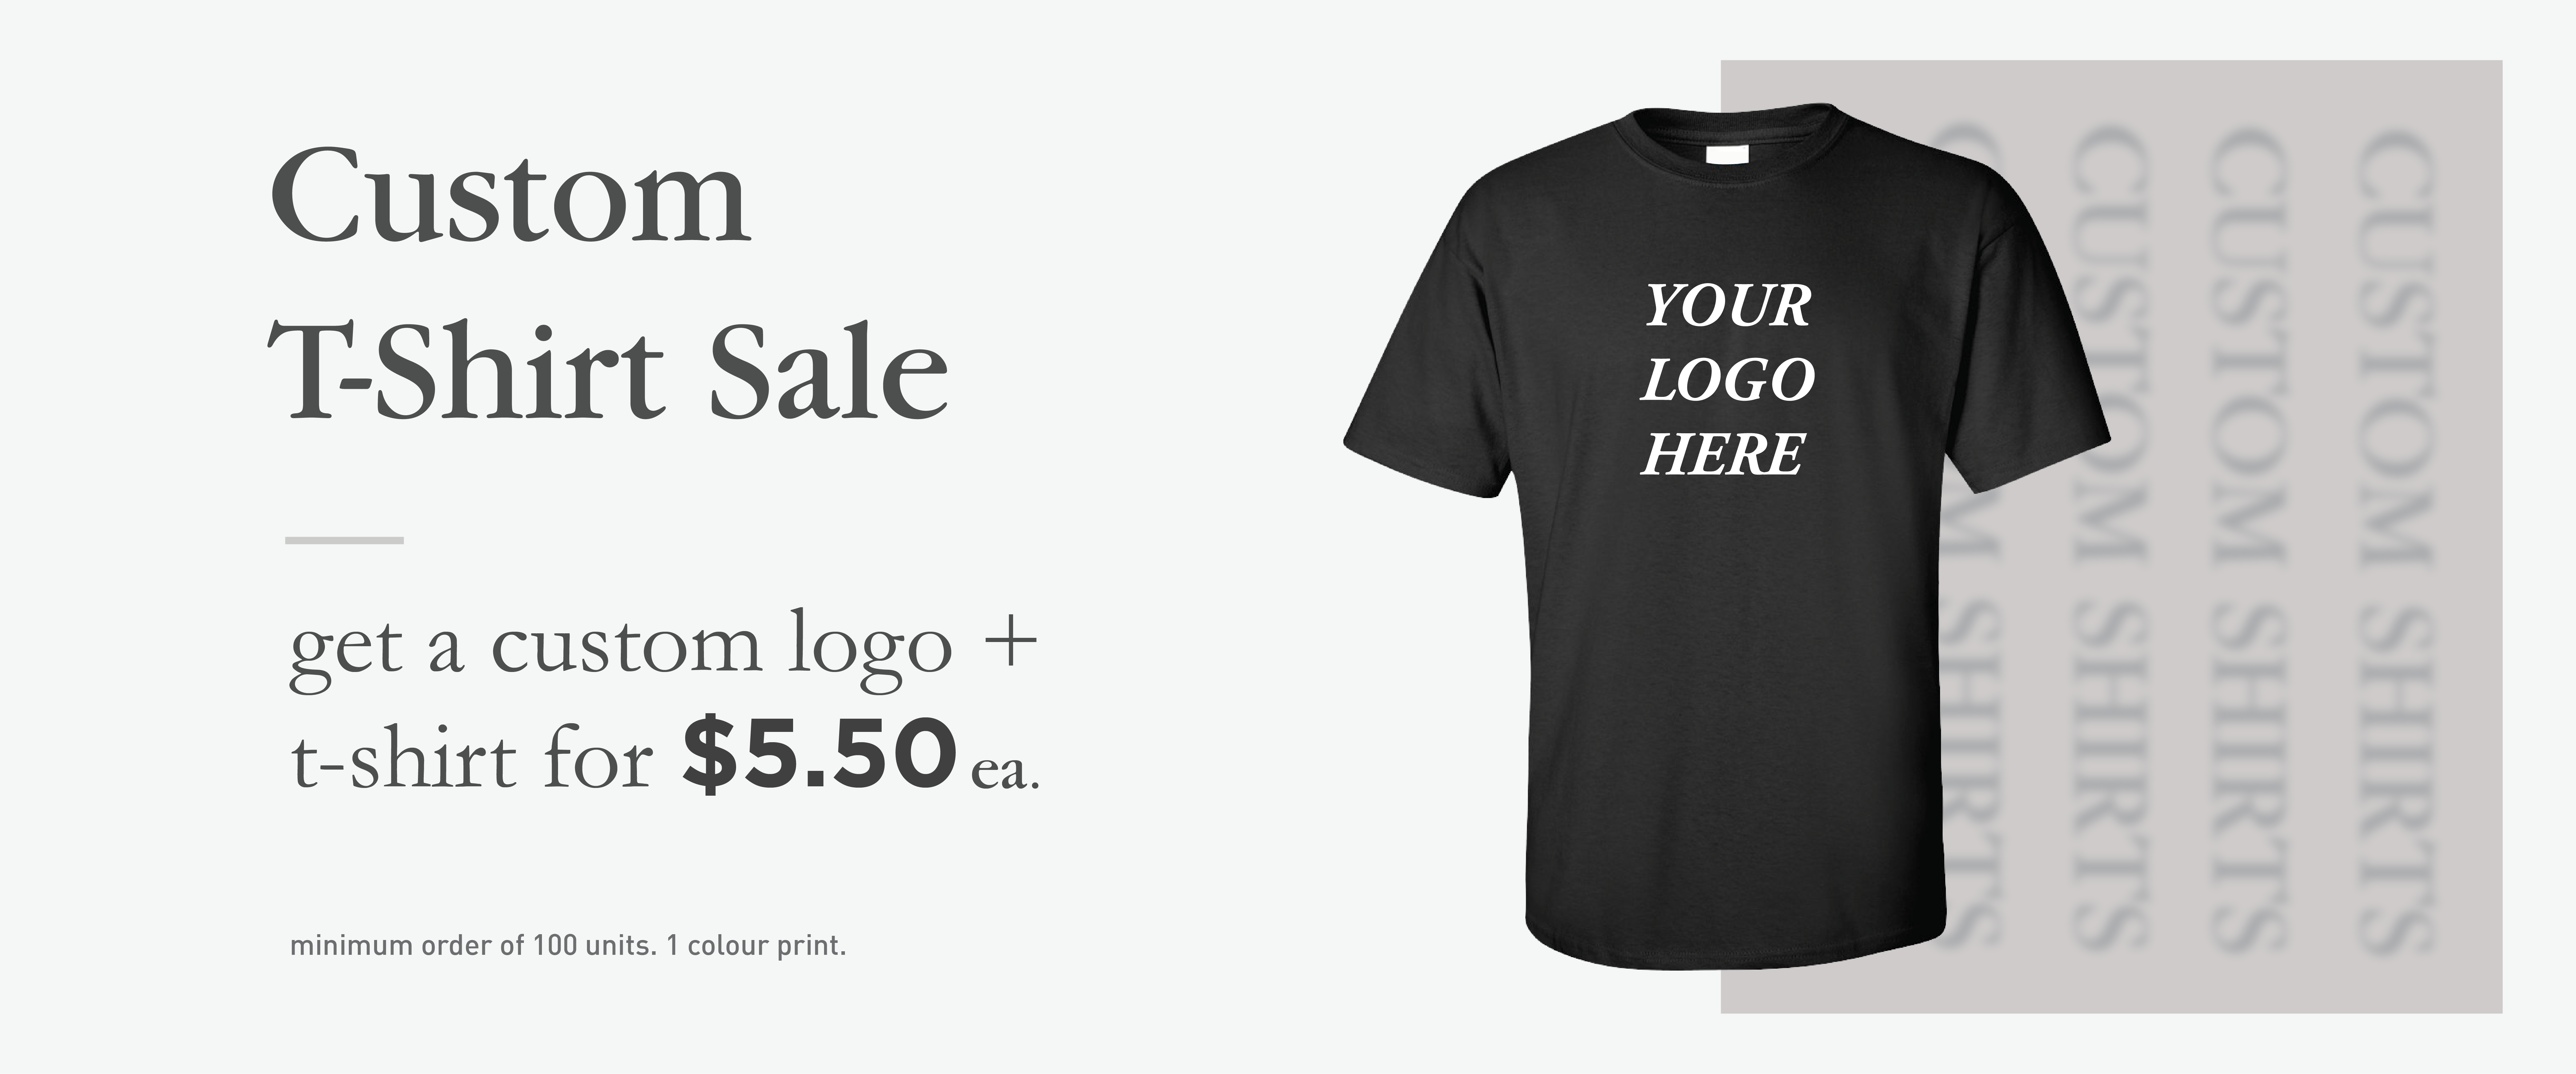 T-shirt Sale 2021 / Jan